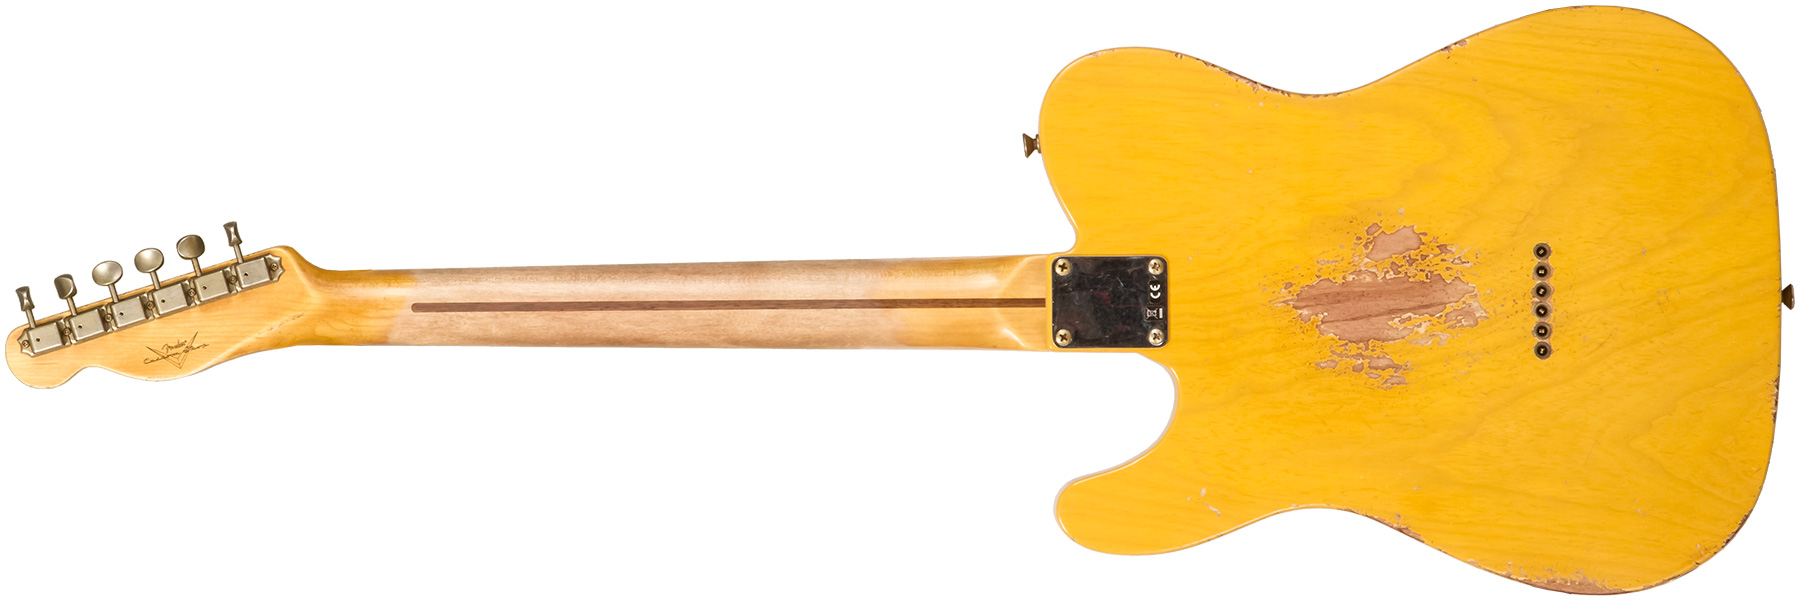 Fender Custom Shop Tele 1952 2s Ht Mn #r137046 - Butterscotch Blonde - Televorm elektrische gitaar - Variation 1